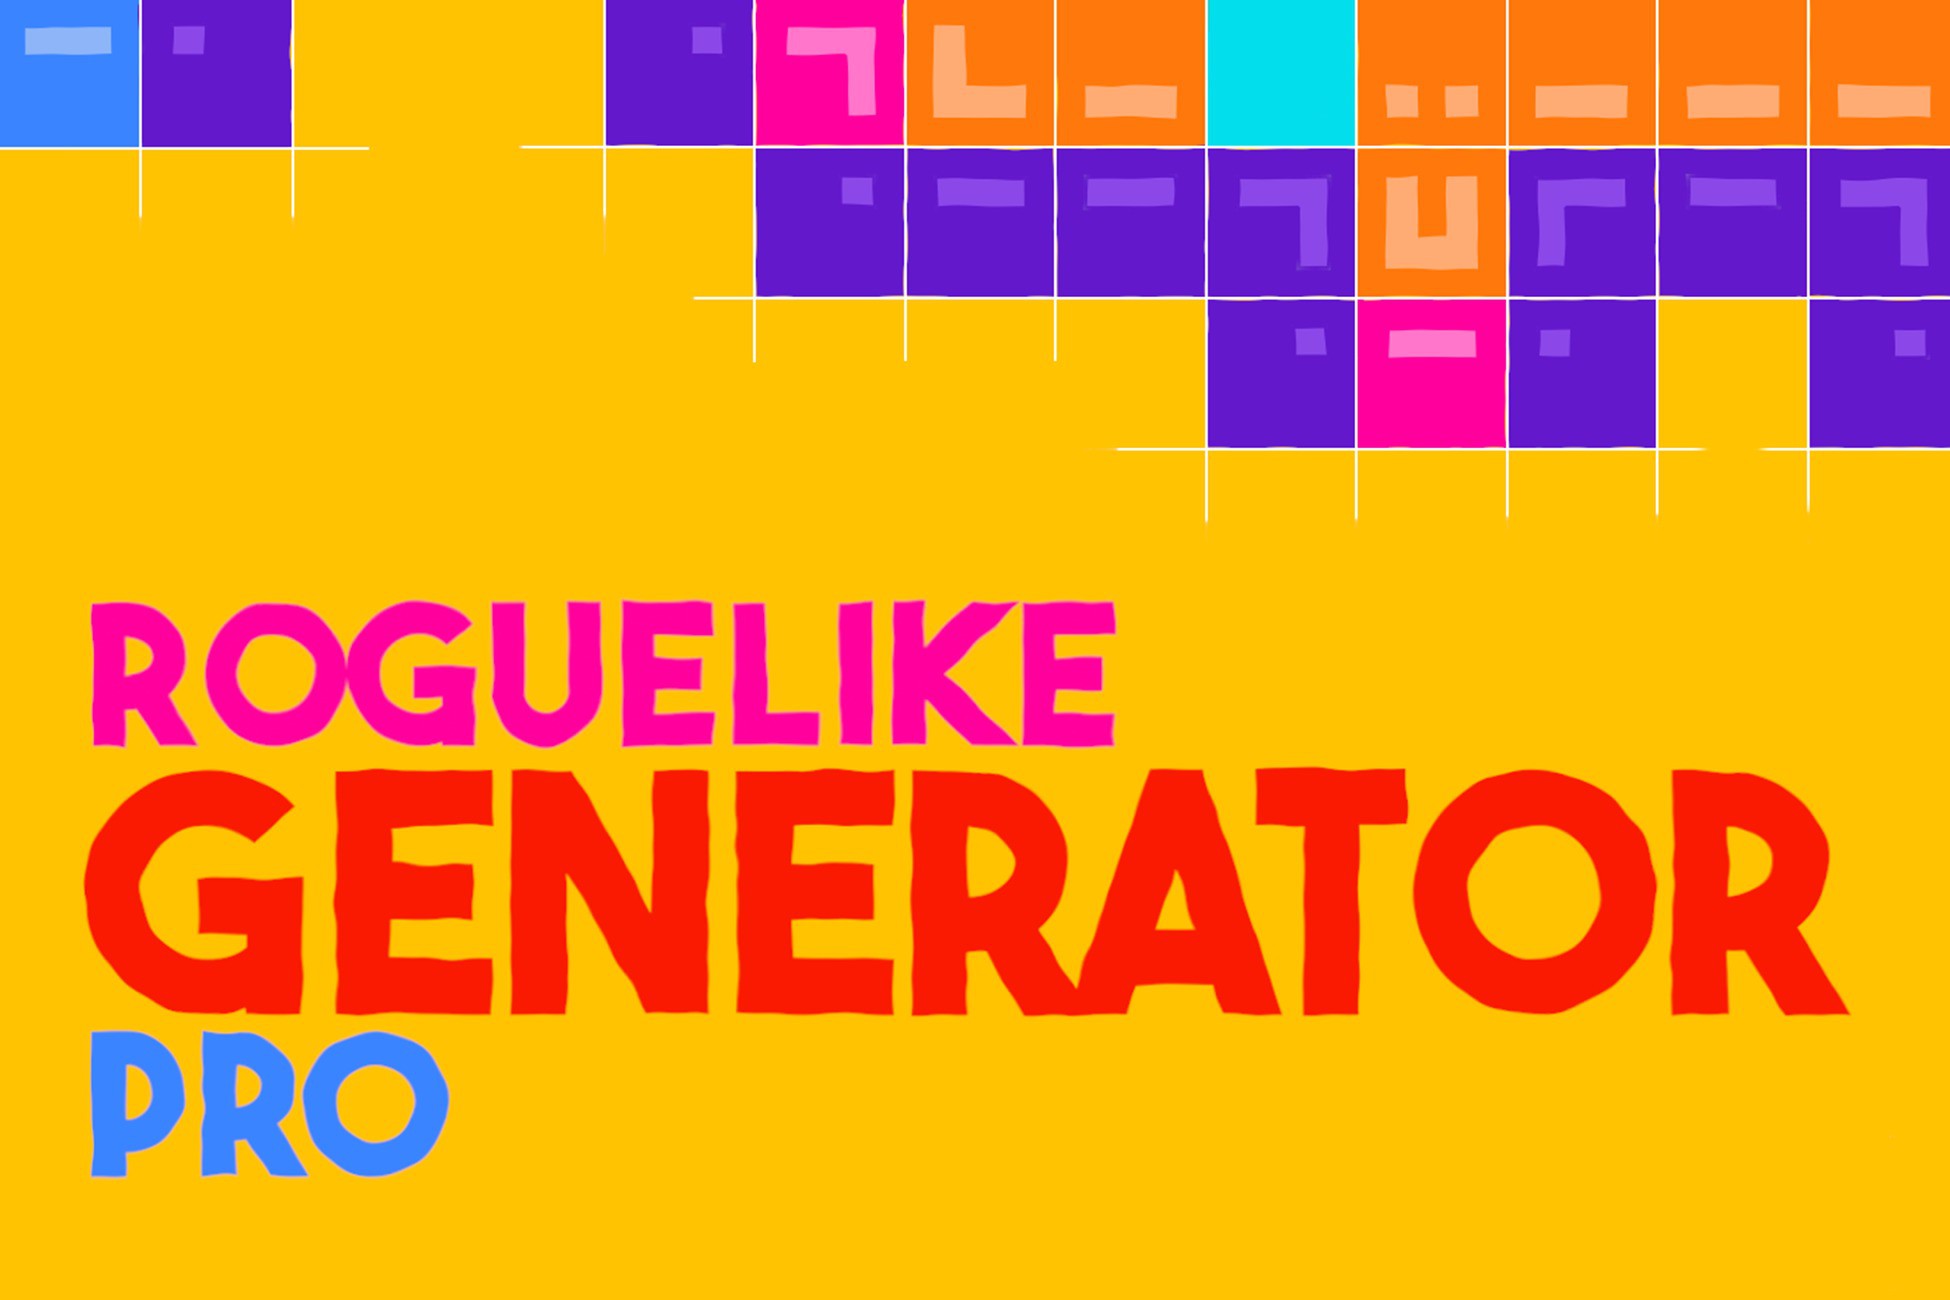 Roguelike Generator Pro for unity game engine